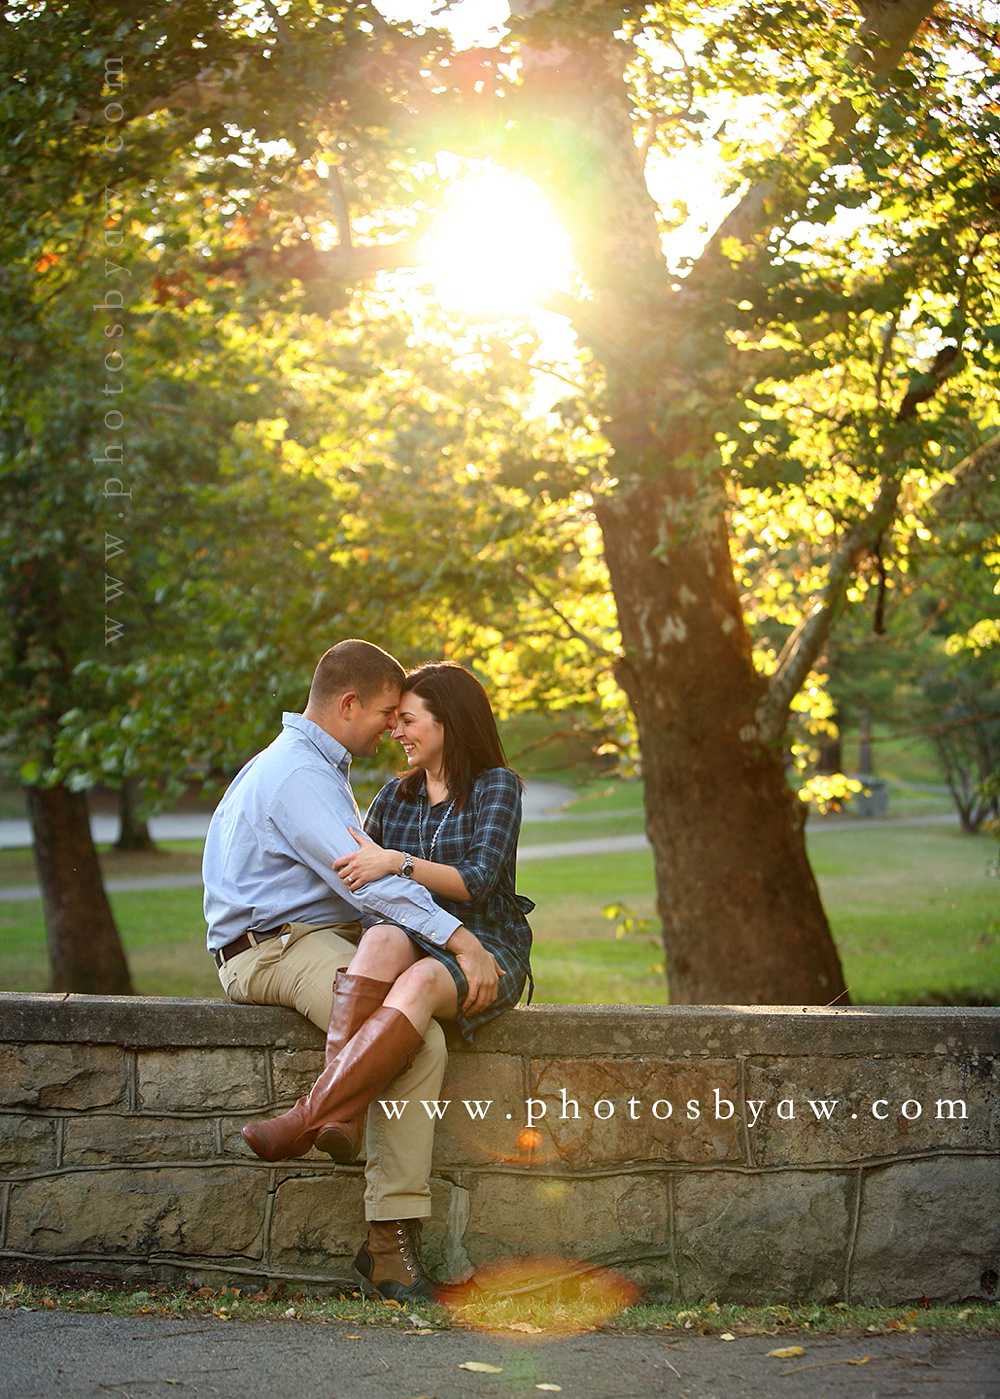 Michele & David | engagement photos at Mingo Creek